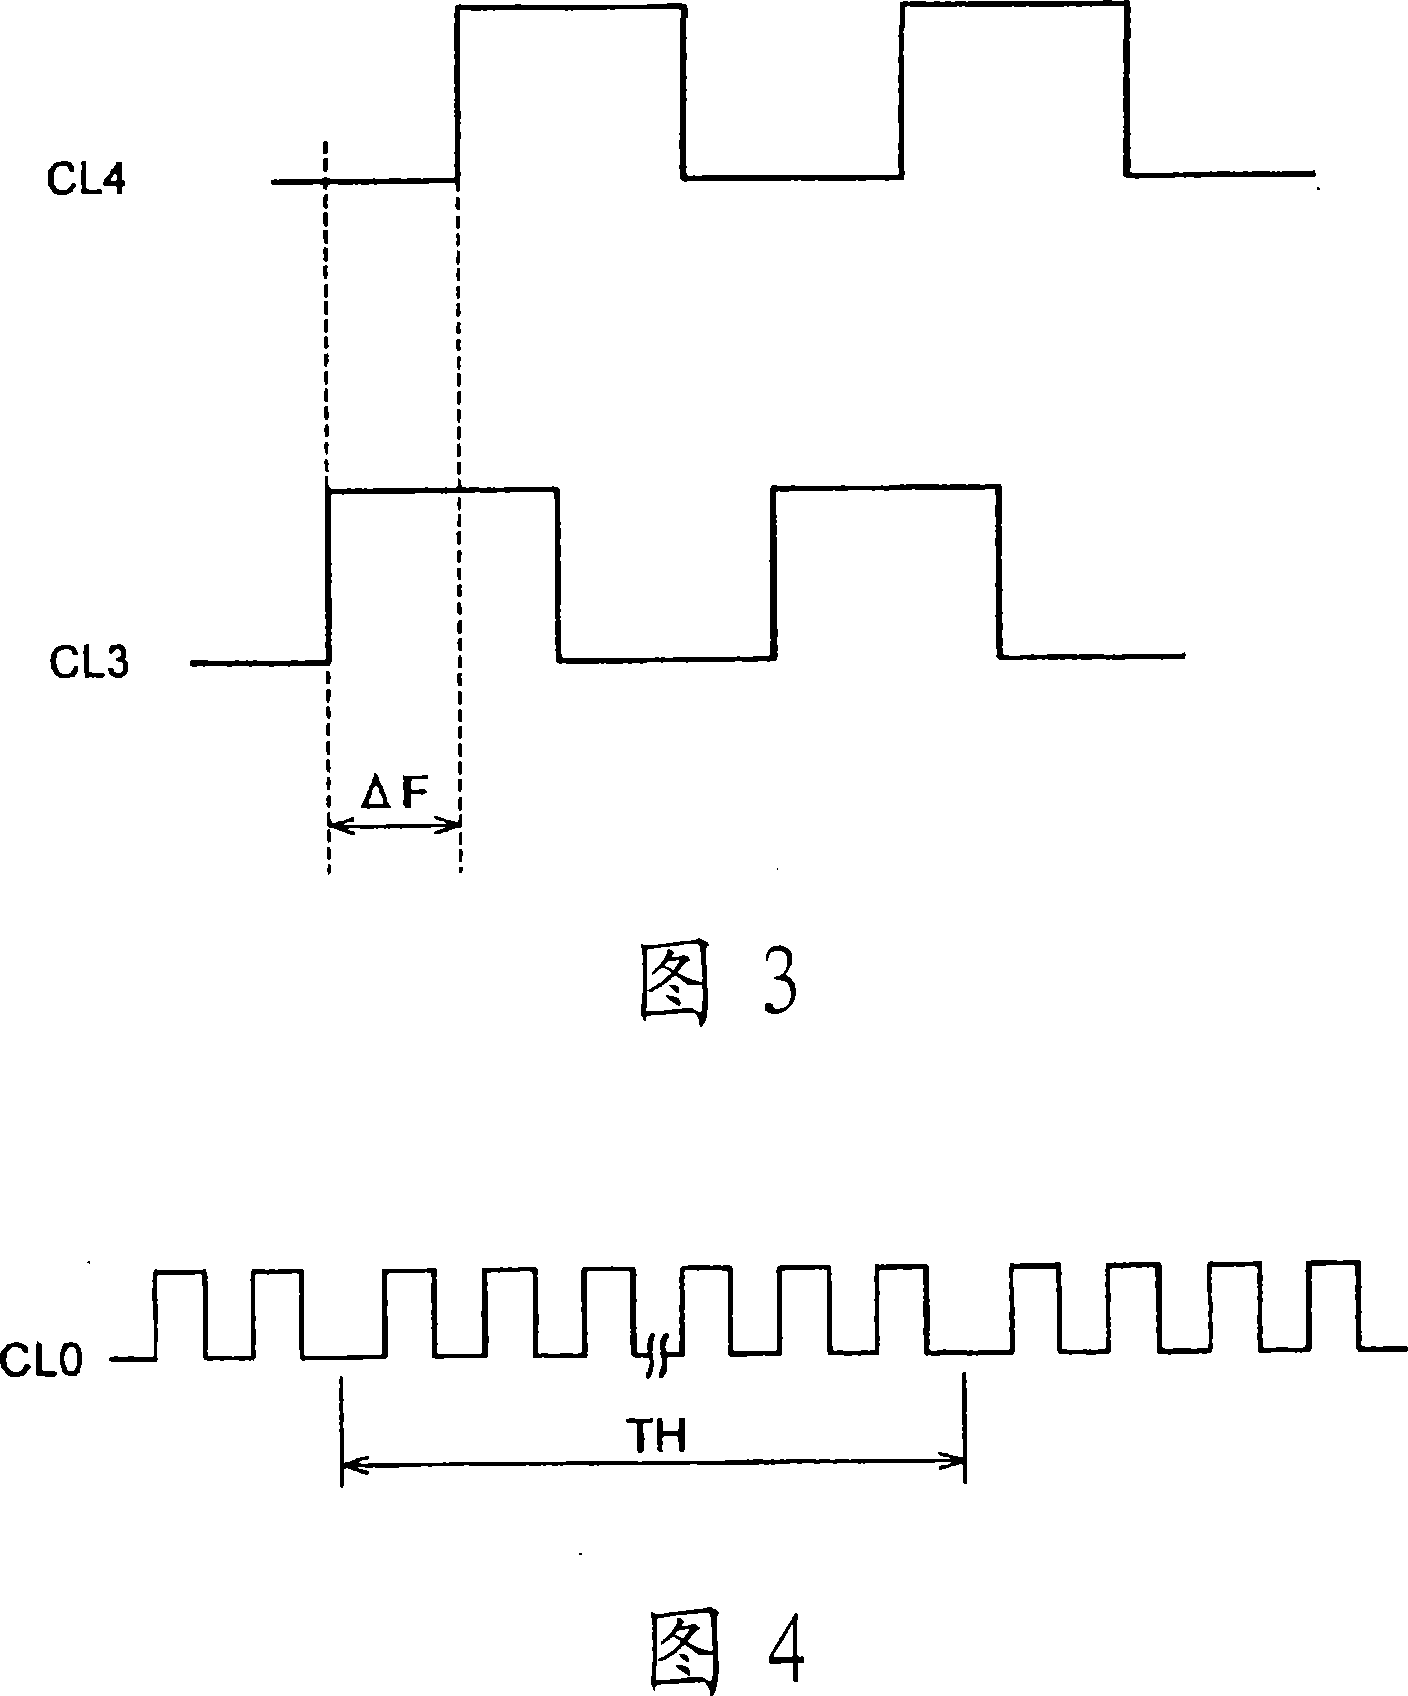 Clock signal output apparatus and control method of same, and electric apparatus and control method of same